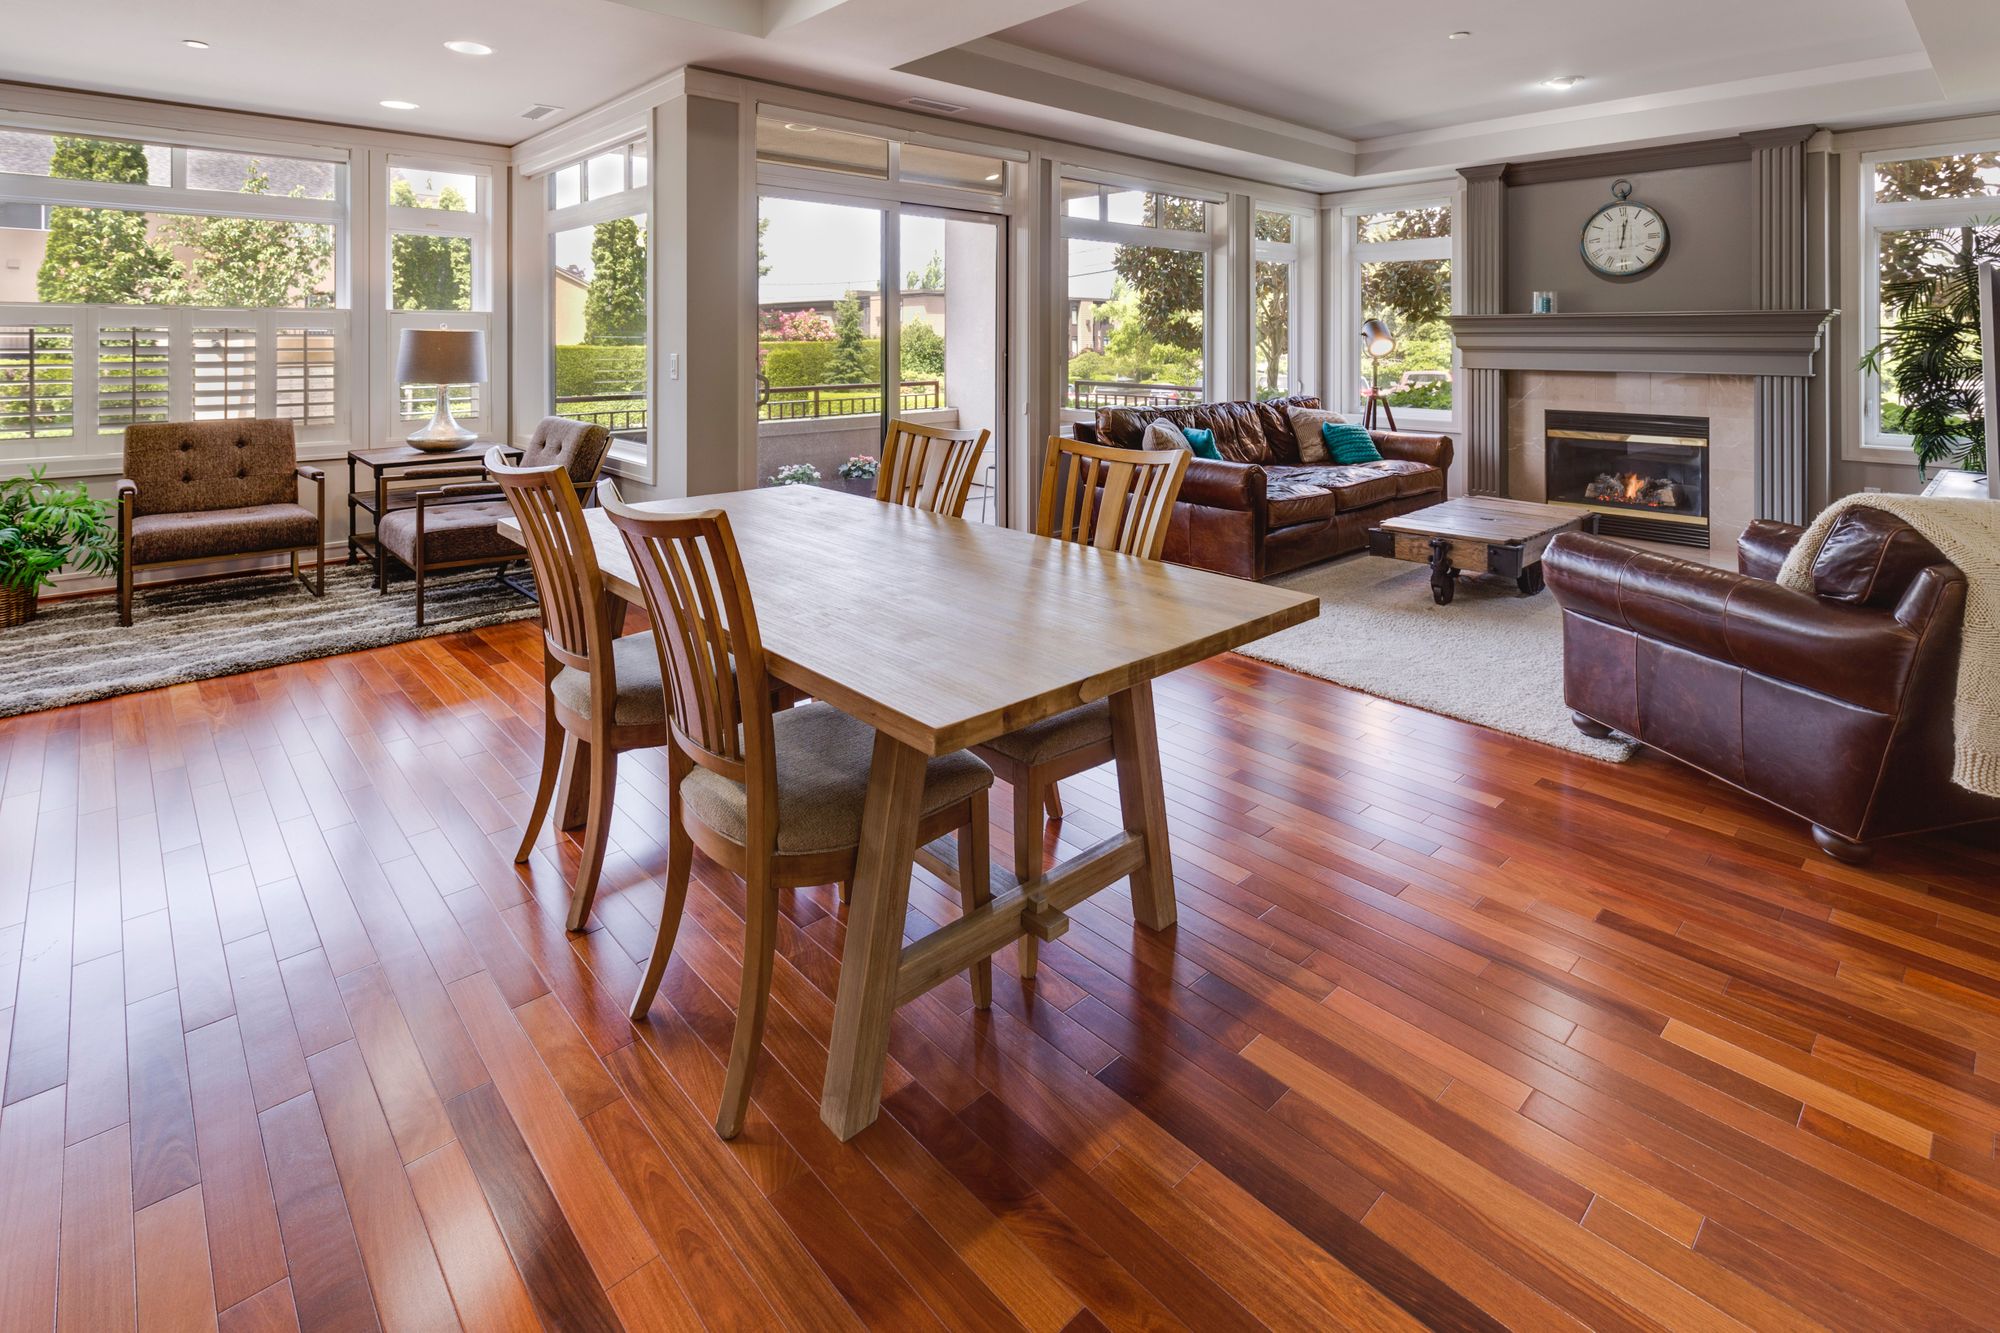 Do Hardwood Floors Increase Home Value, Average Cost To Install Laminate Hardwood Floors